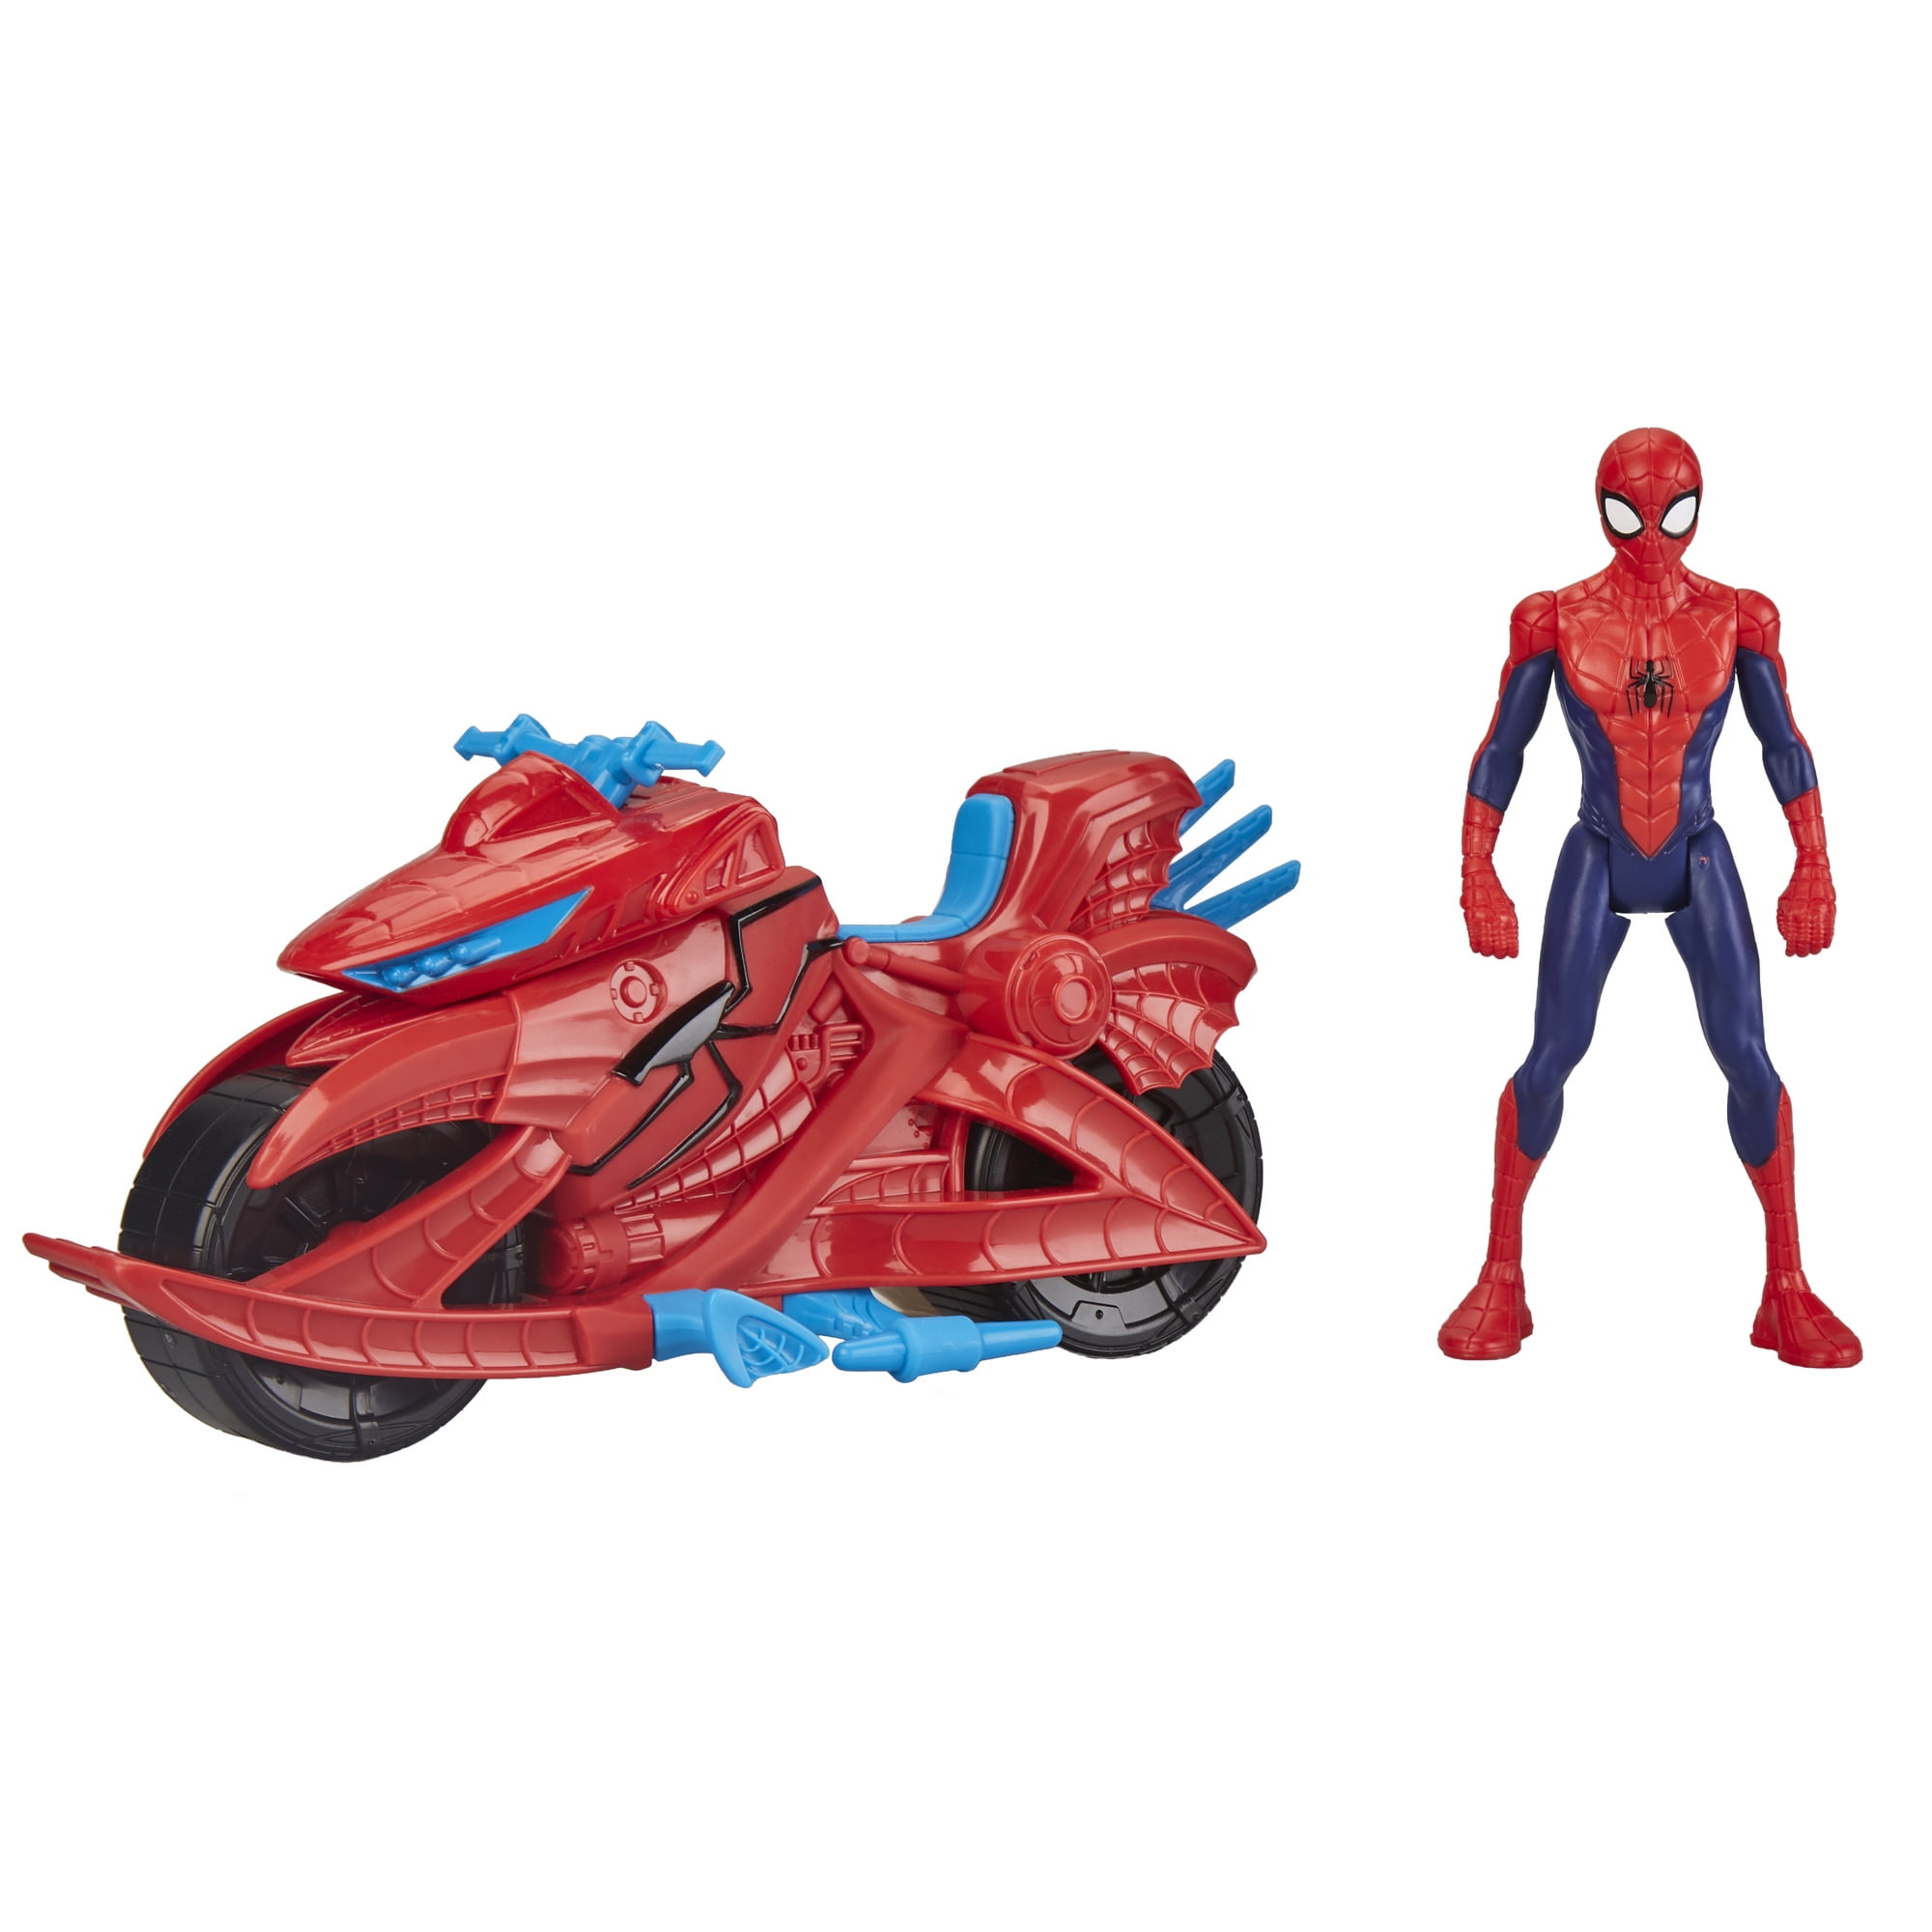 Marvel Spider-Man Titan Hero Series Spider-Man Figure with Spider Cycle Hasbro B9767 